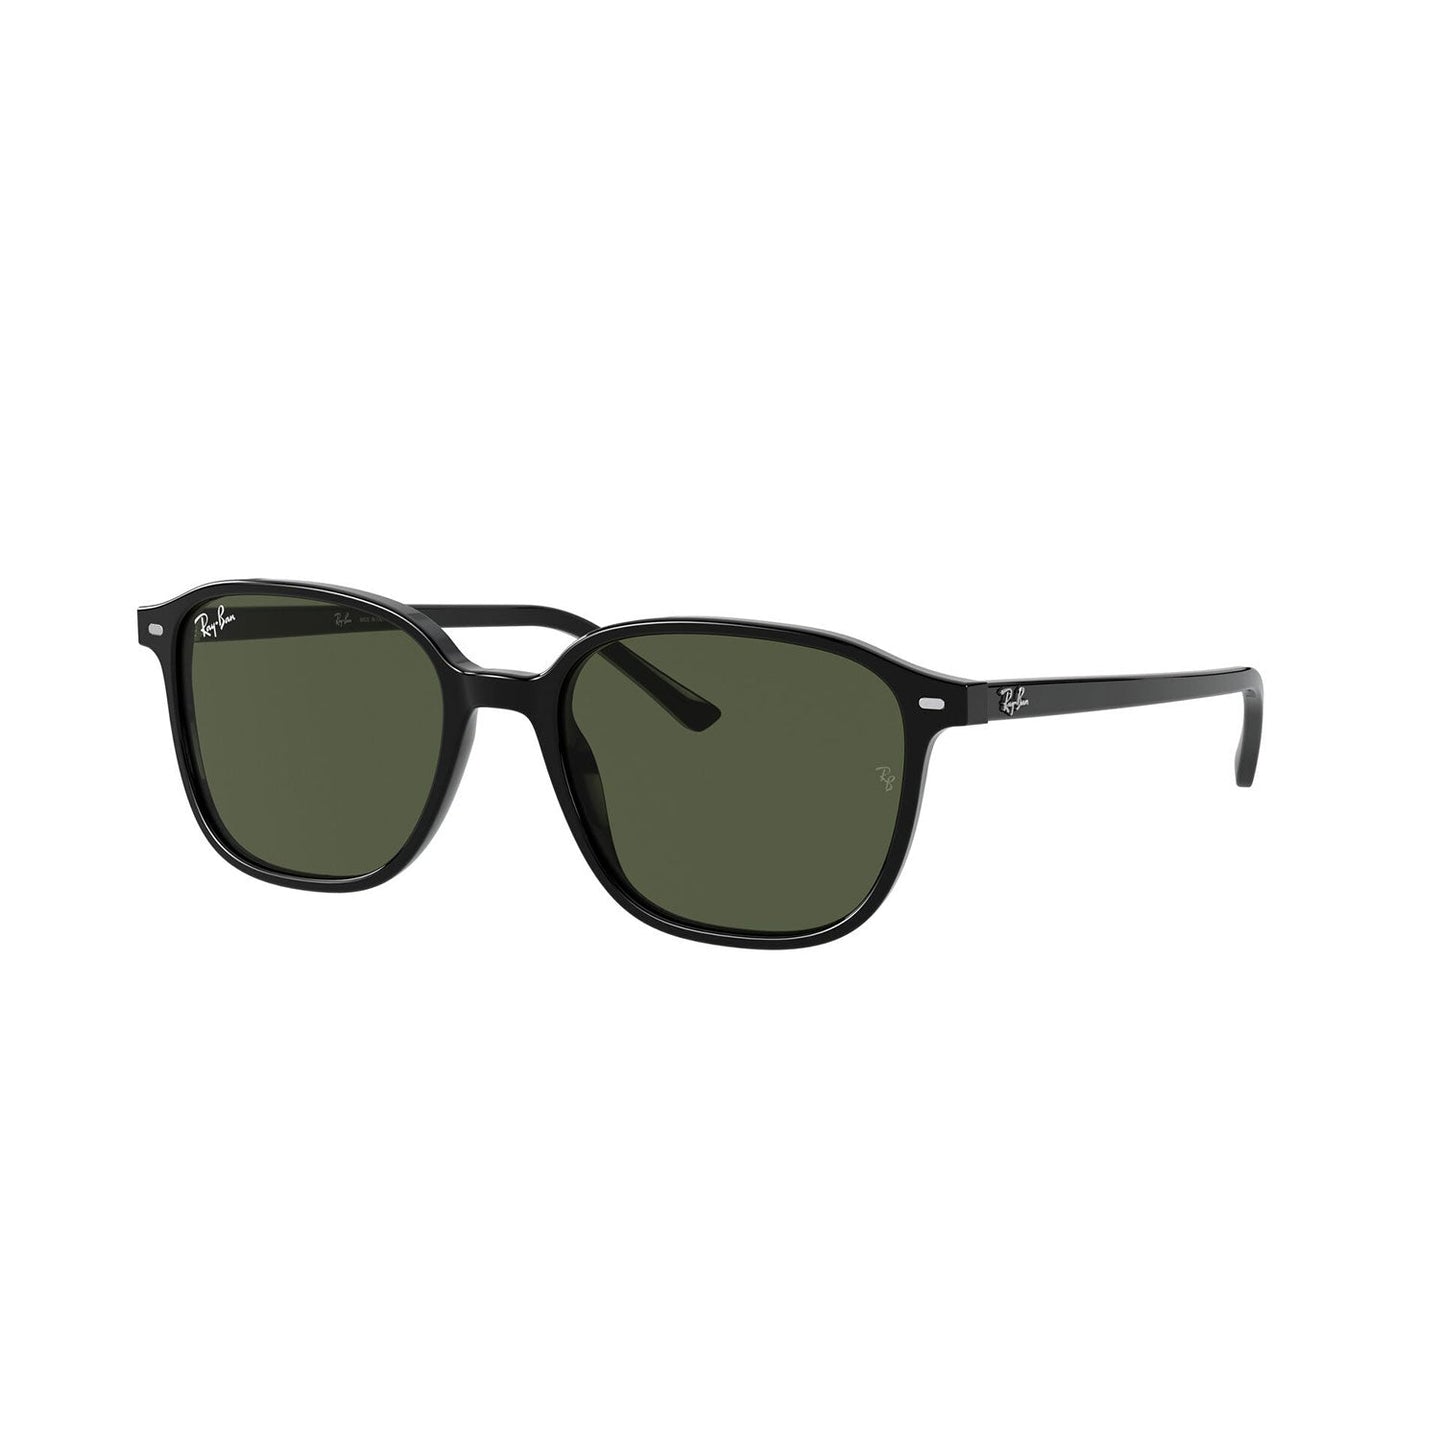 sunglasses ray ban model rb 2193 leonard color 901/31 black